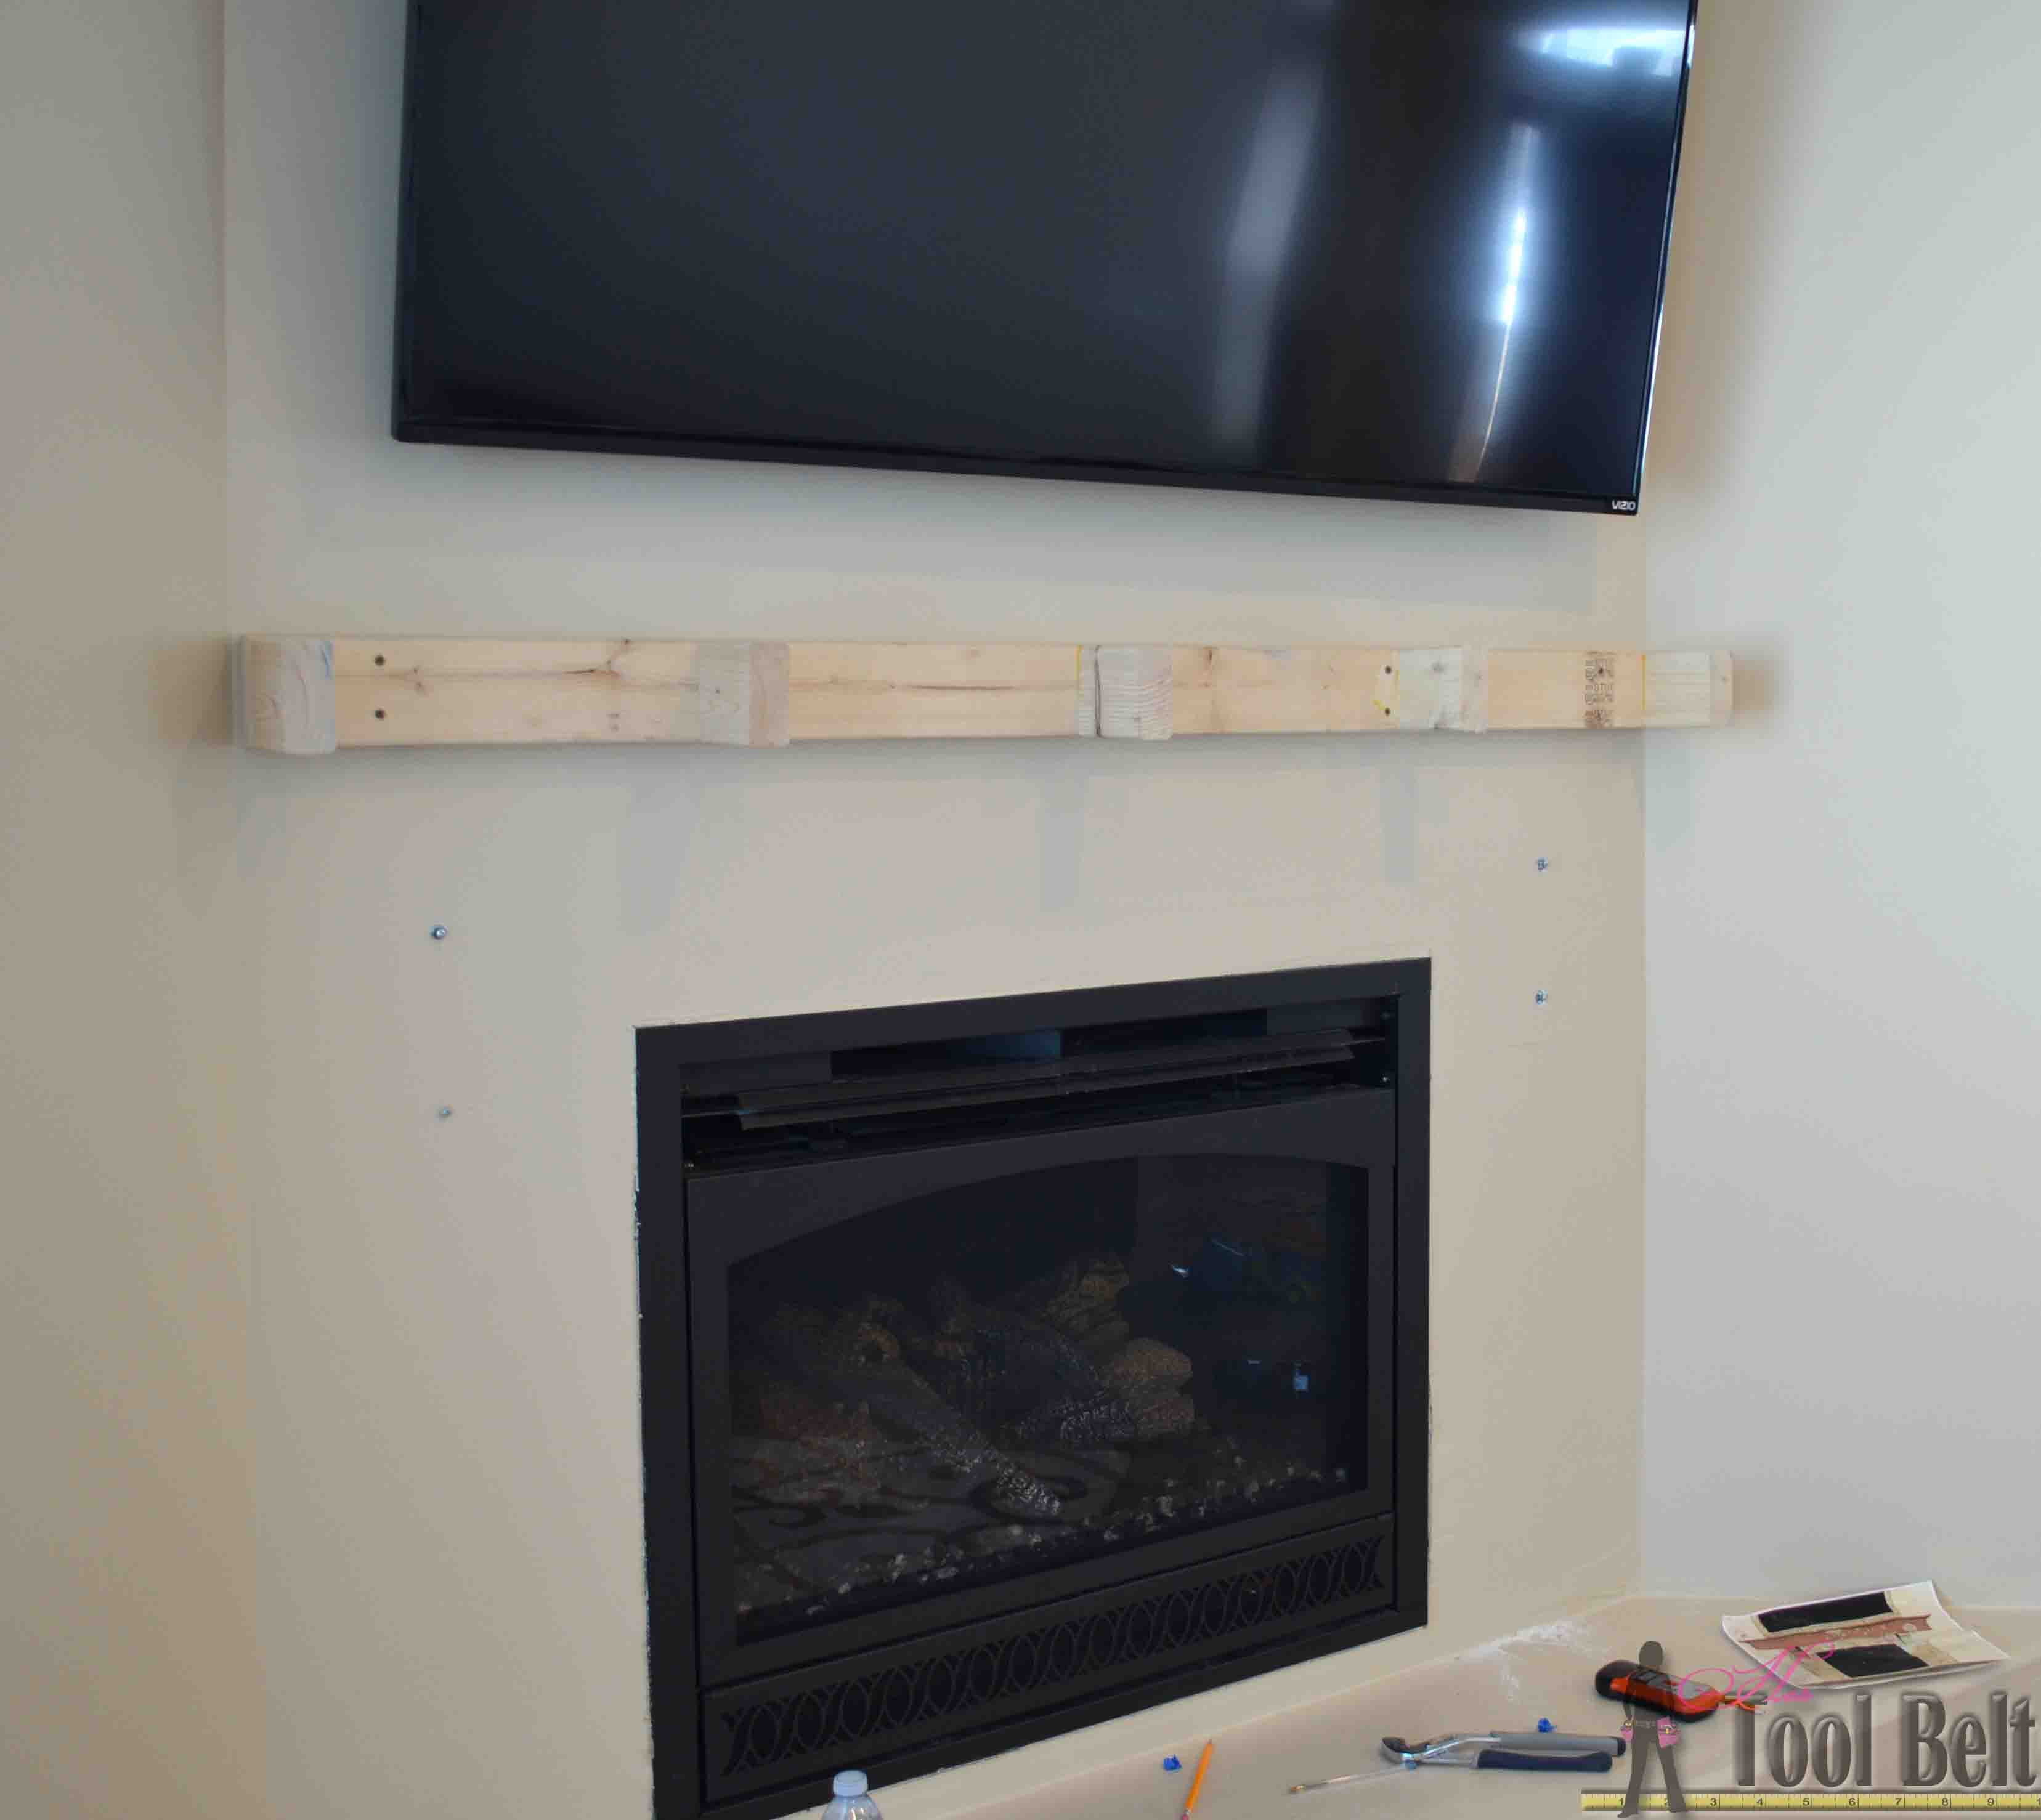 Best ideas about DIY Mantel Shelf Plans
. Save or Pin DIY Fireplace Mantel Shelf Her Tool Belt Now.